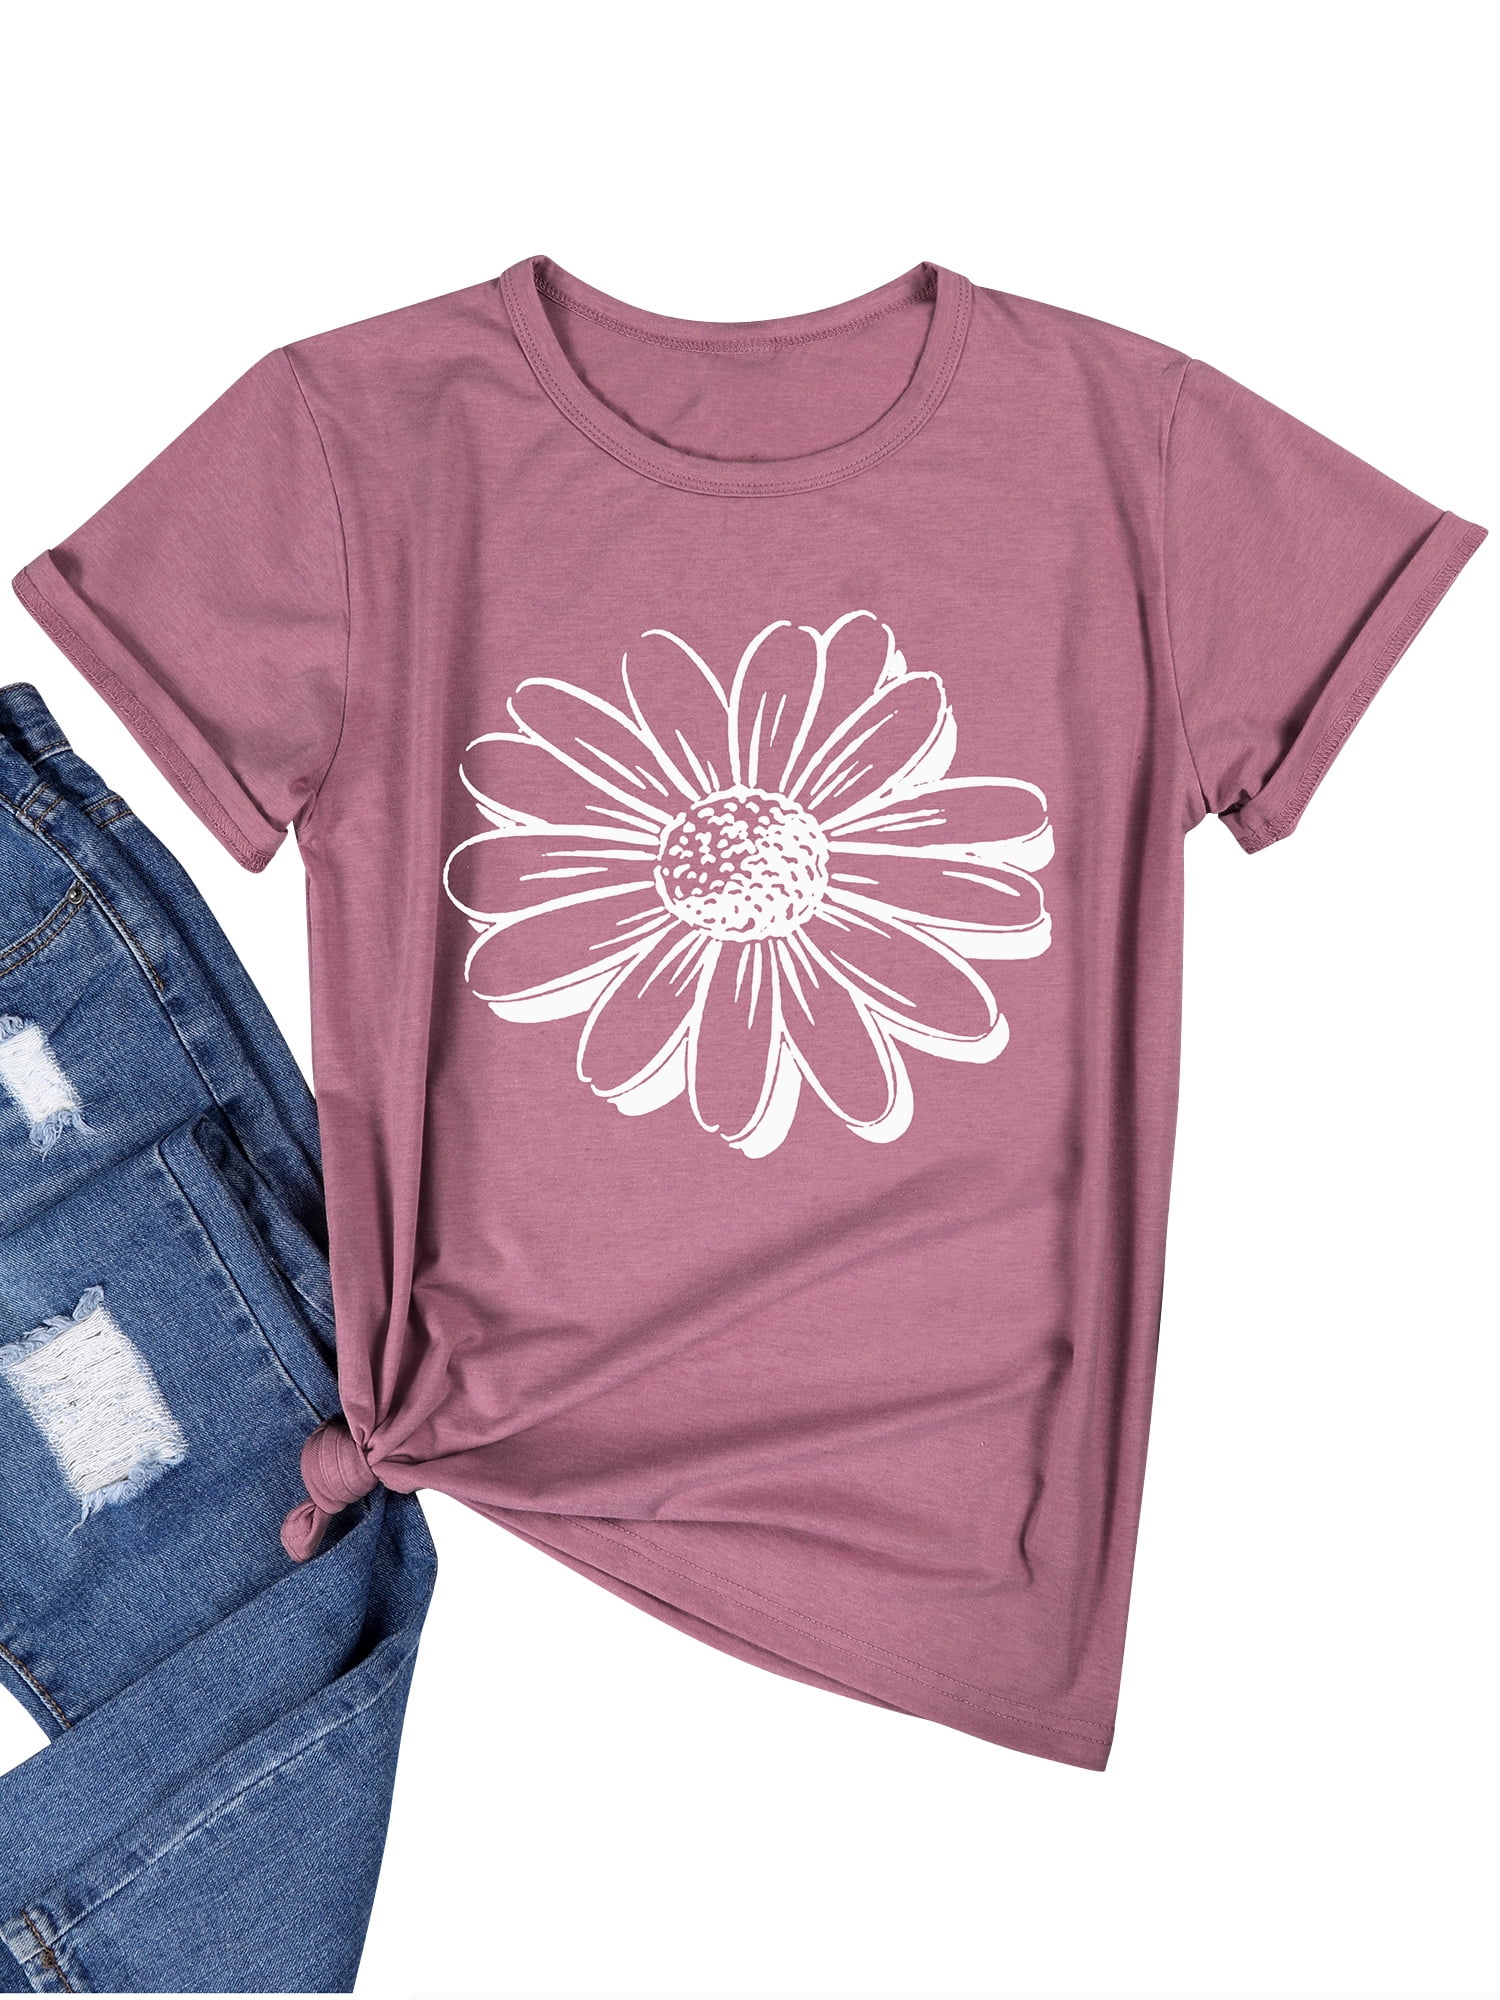 Women Flower Graphic Printed T-Shirt,XL - Walmart.com